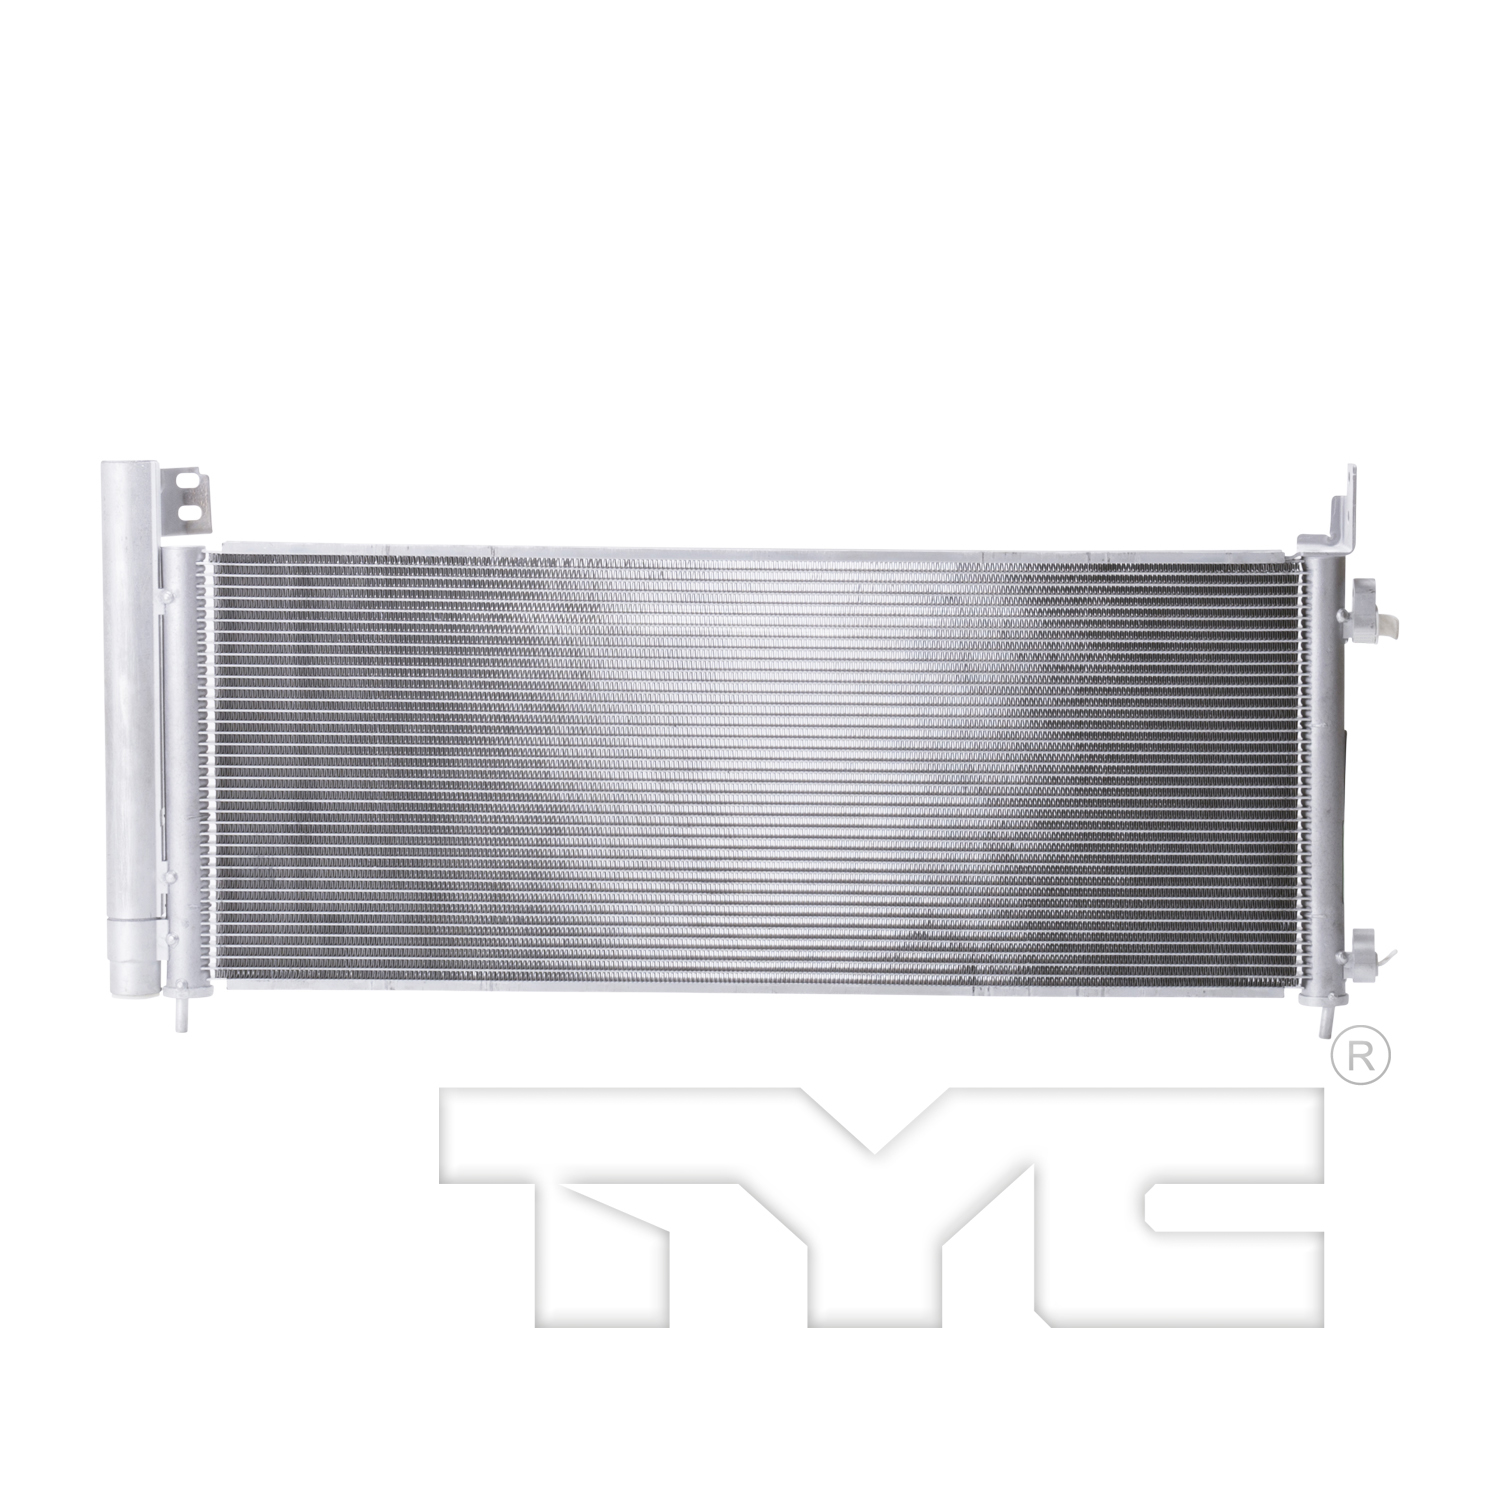 Aftermarket AC CONDENSERS for TOYOTA - RAV4, RAV4,16-18,Air conditioning condenser